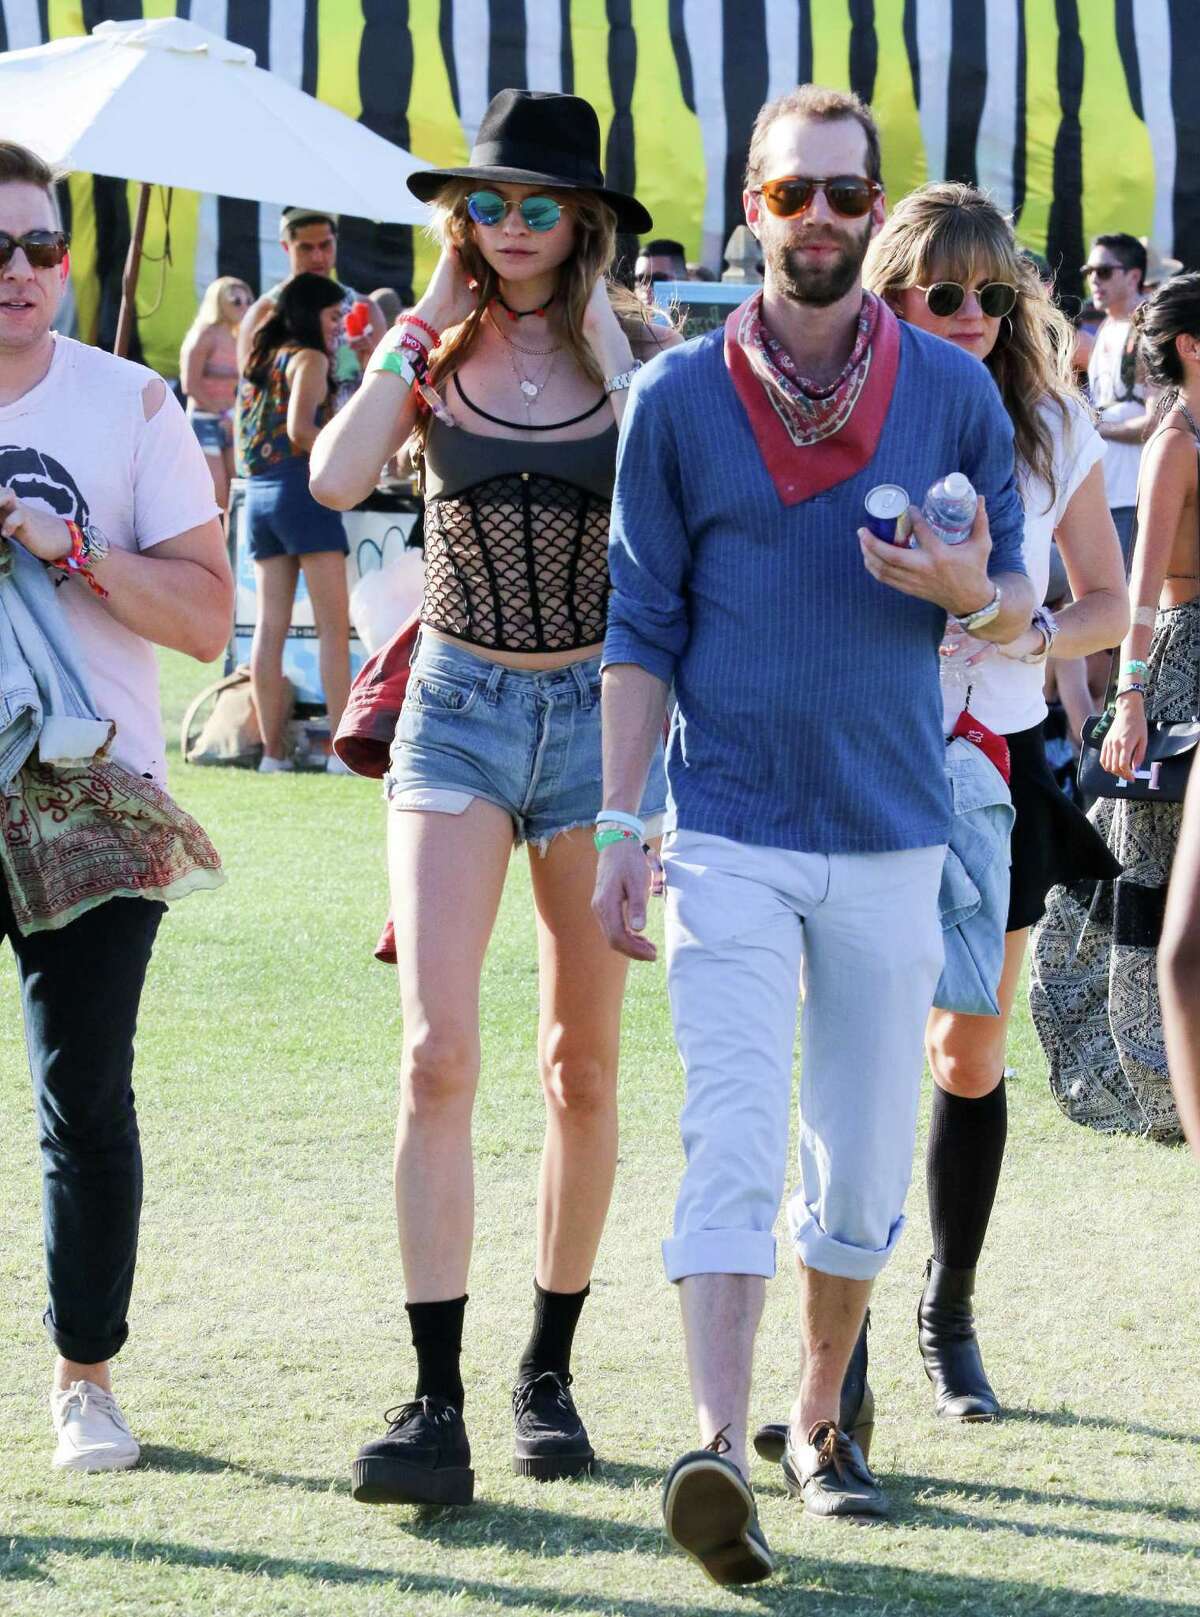 Festival Fashion at Coachella 2015